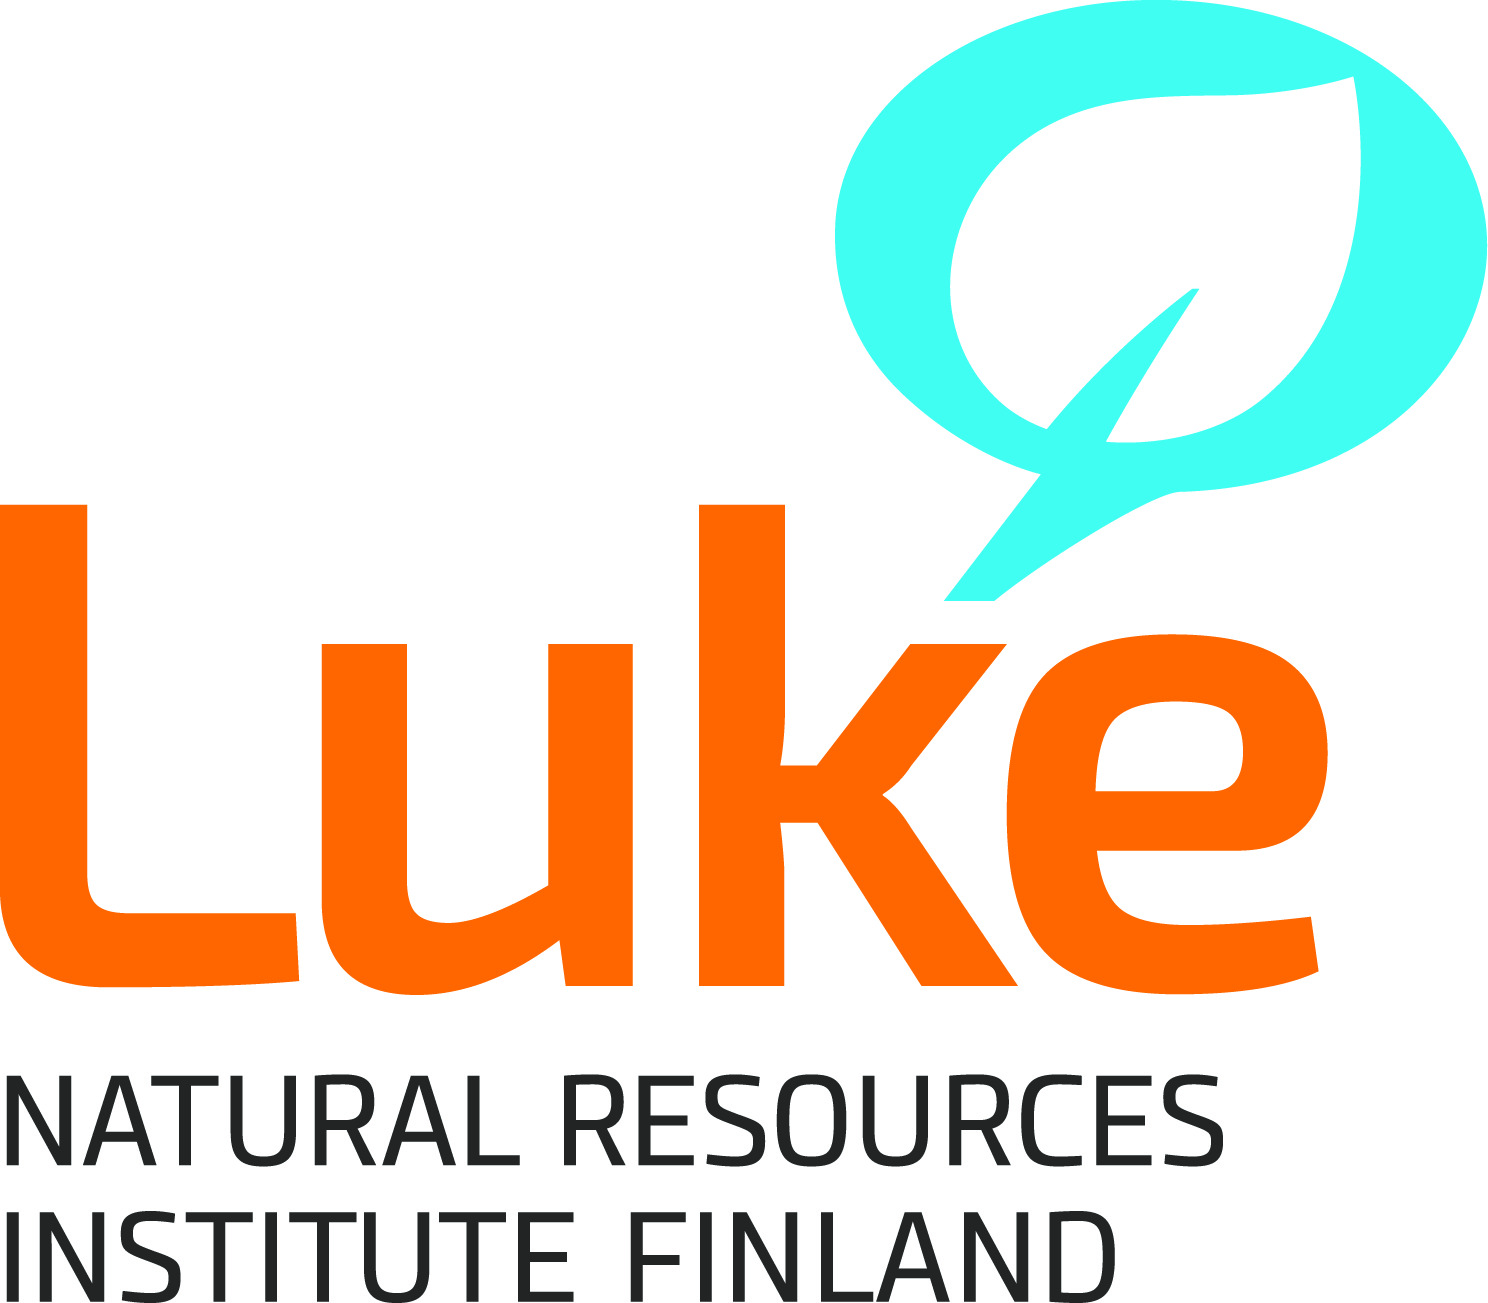 NATURAL RESOURCES INSTITUTE FINLAND